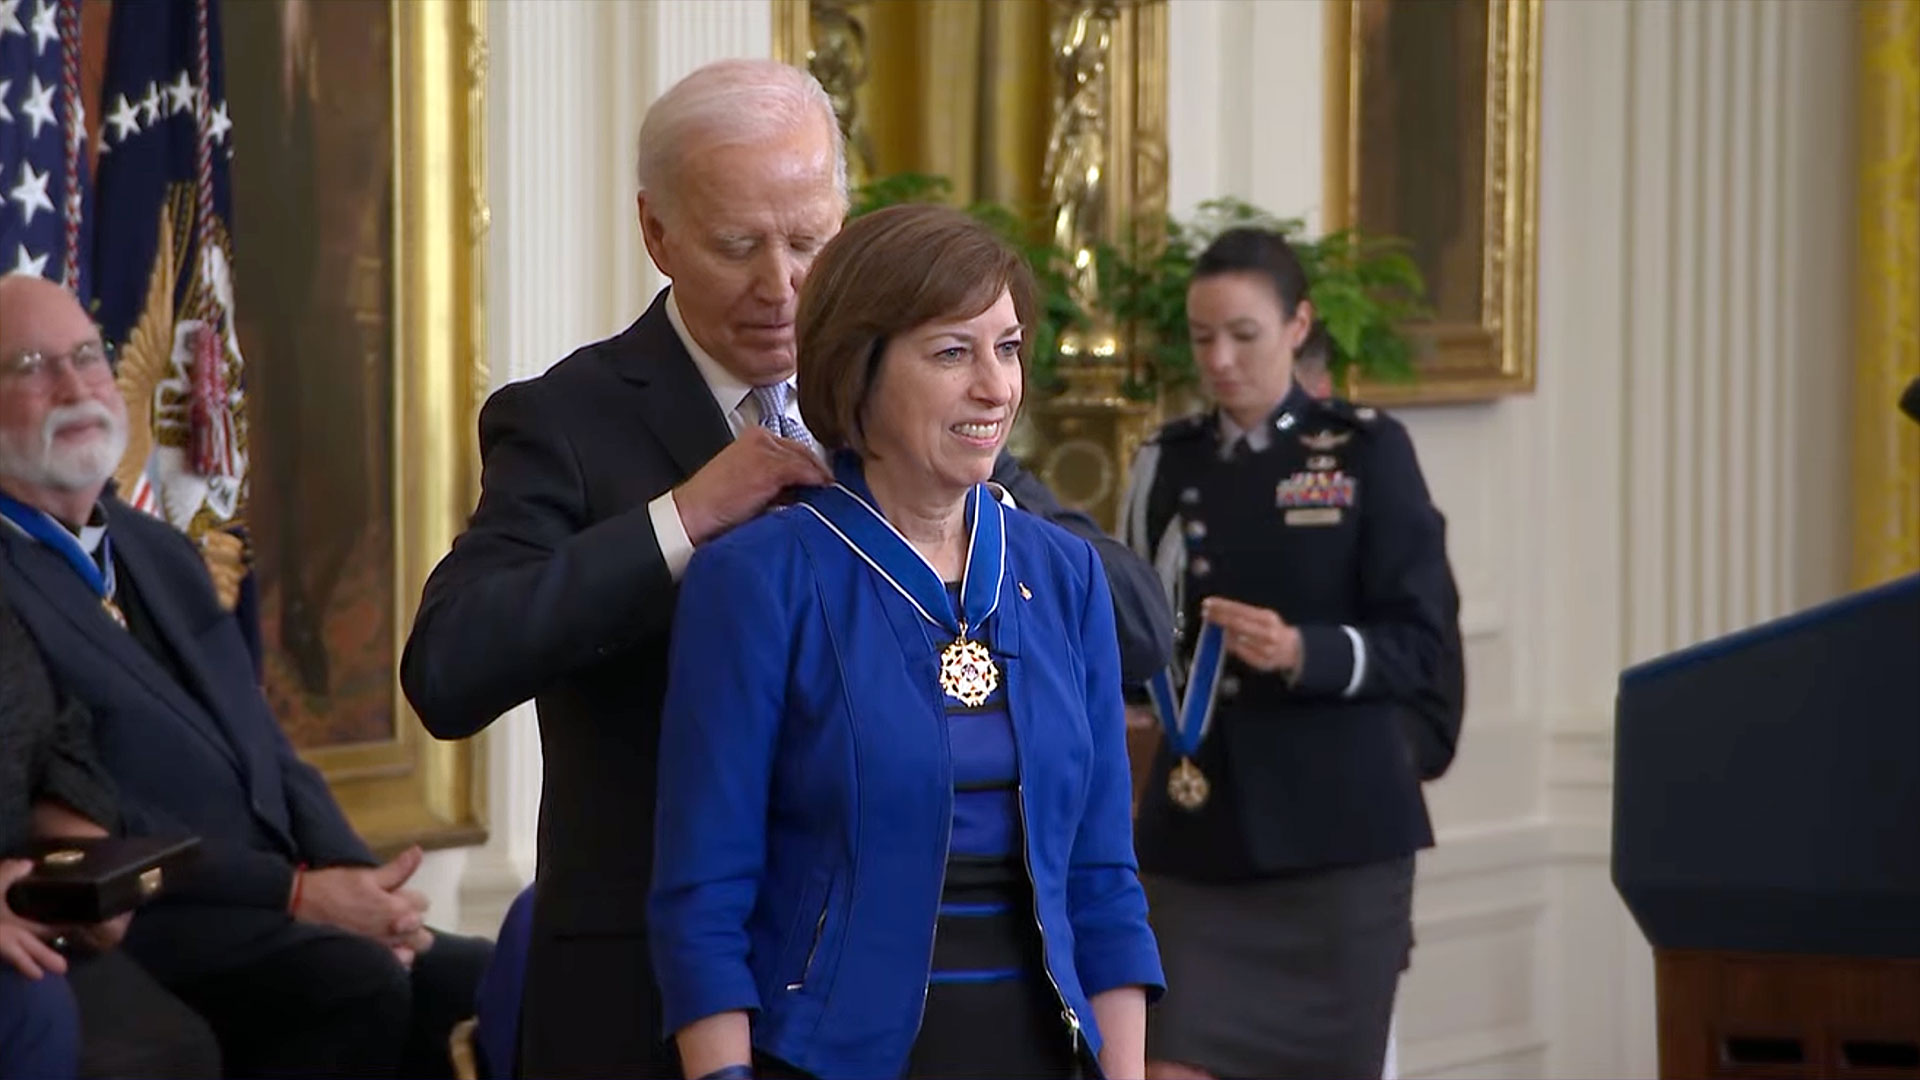 NASA astronaut and director Ellen Ochoa awarded Presidential Medal of Freedom